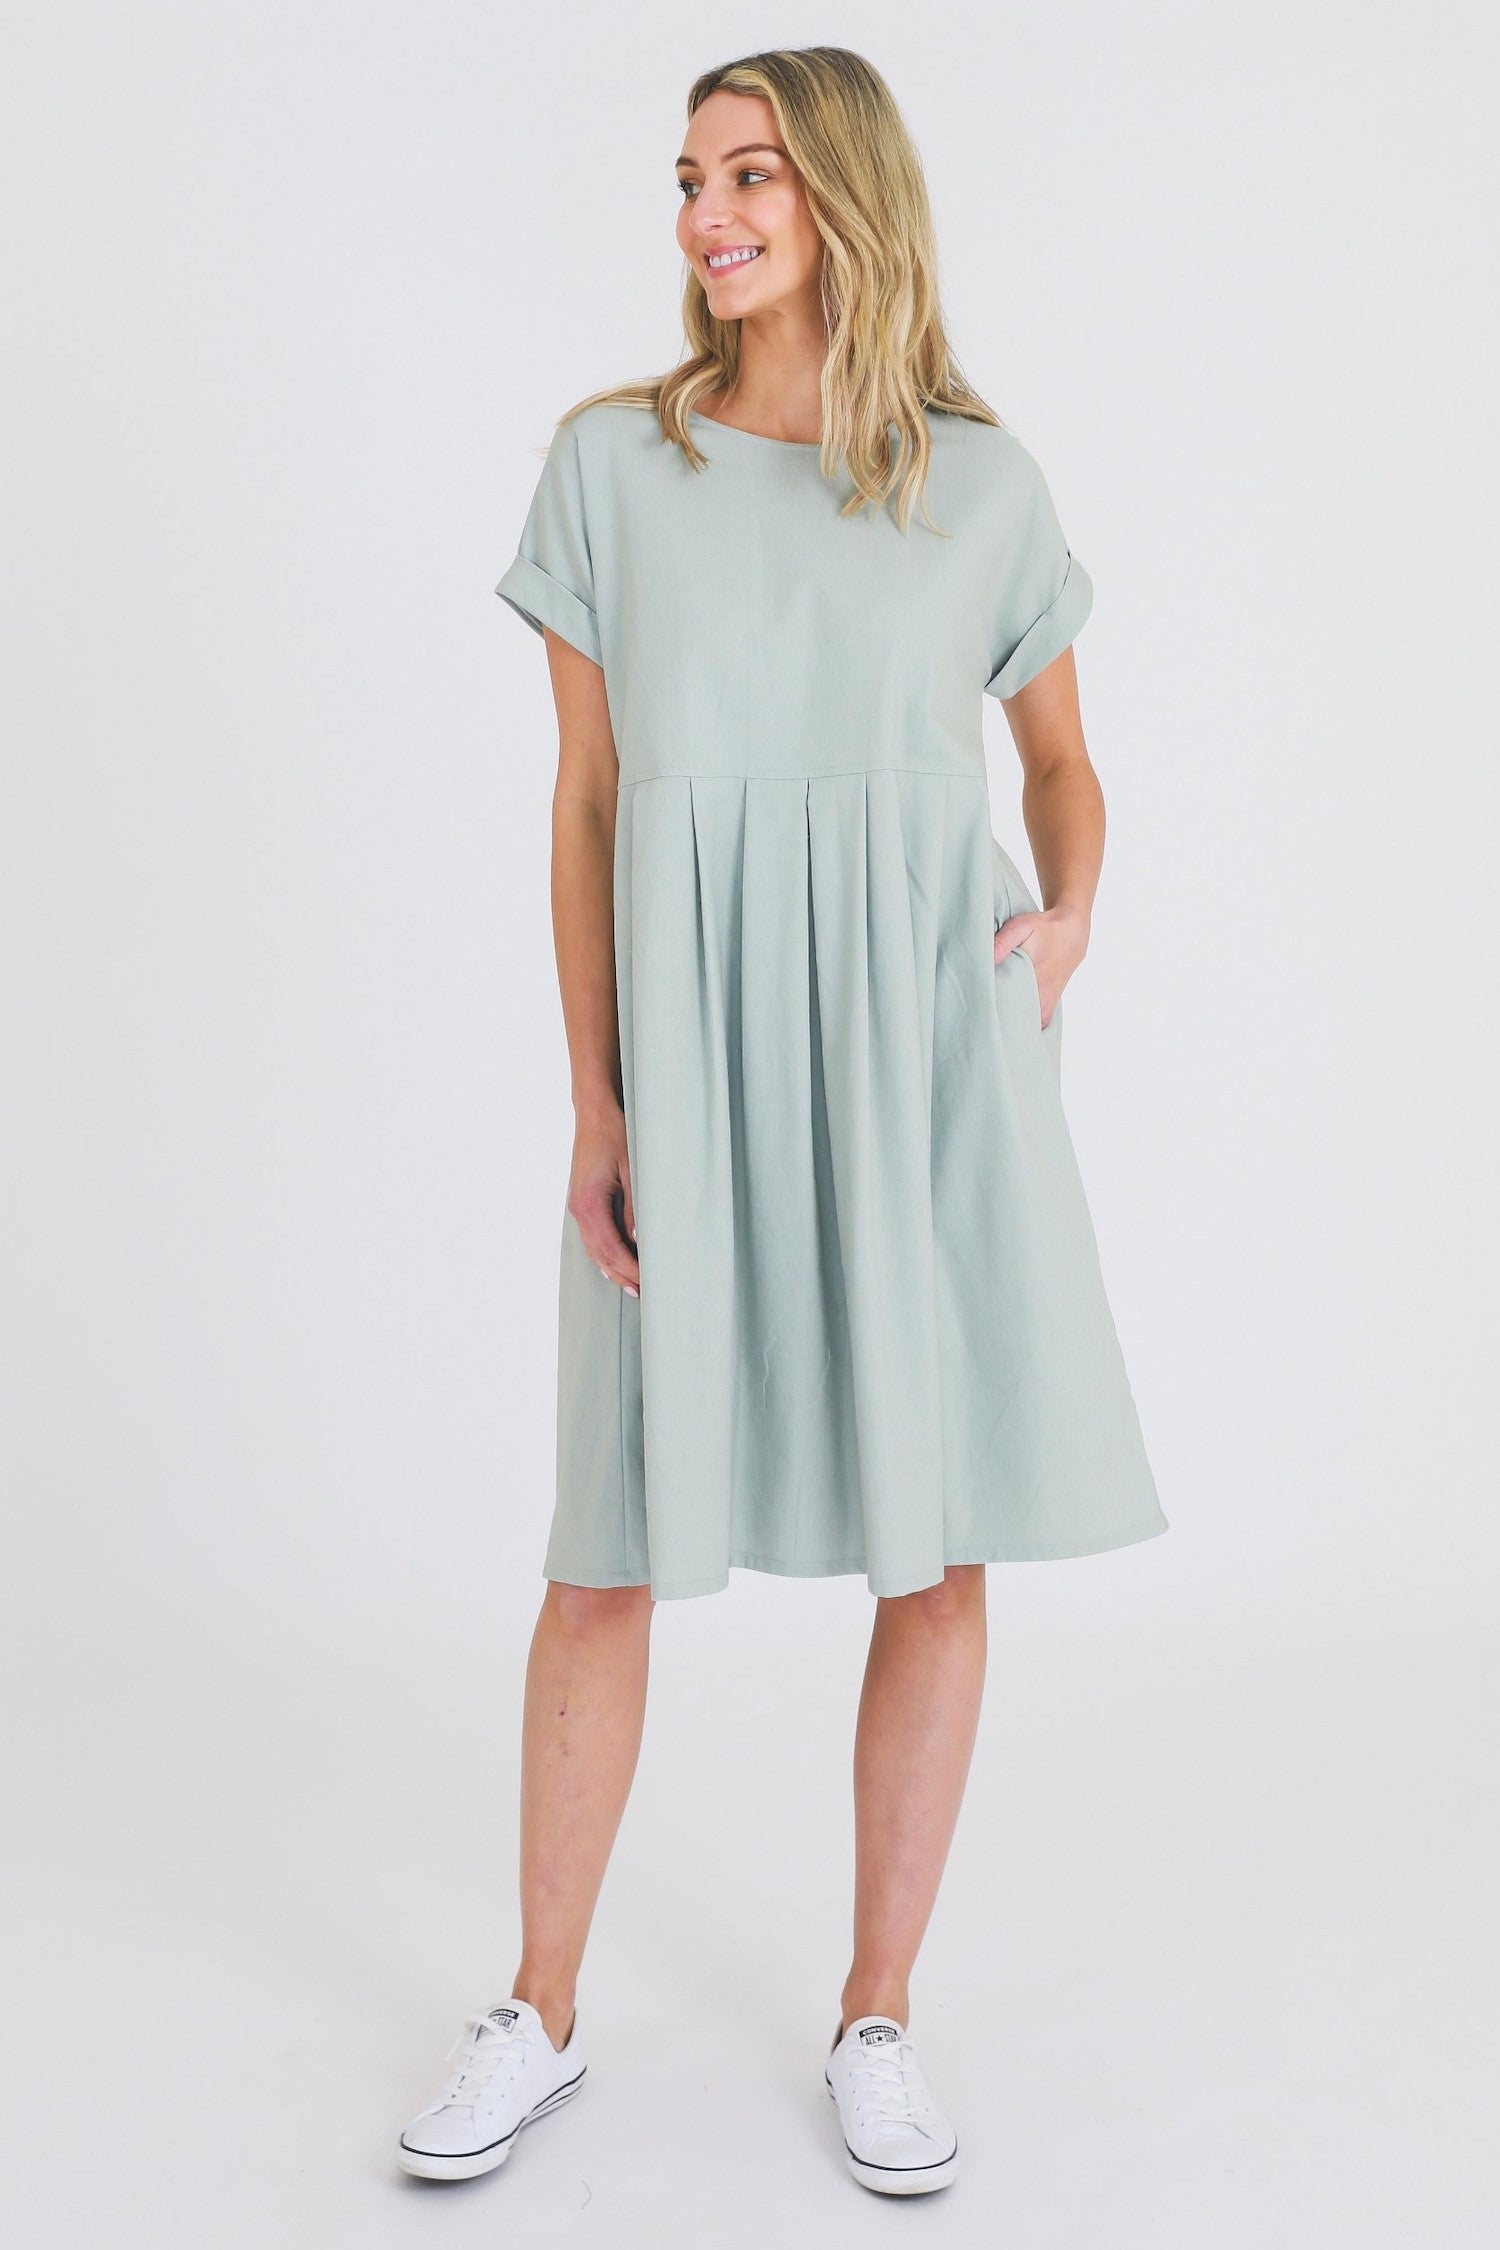 Linen Dress Australia